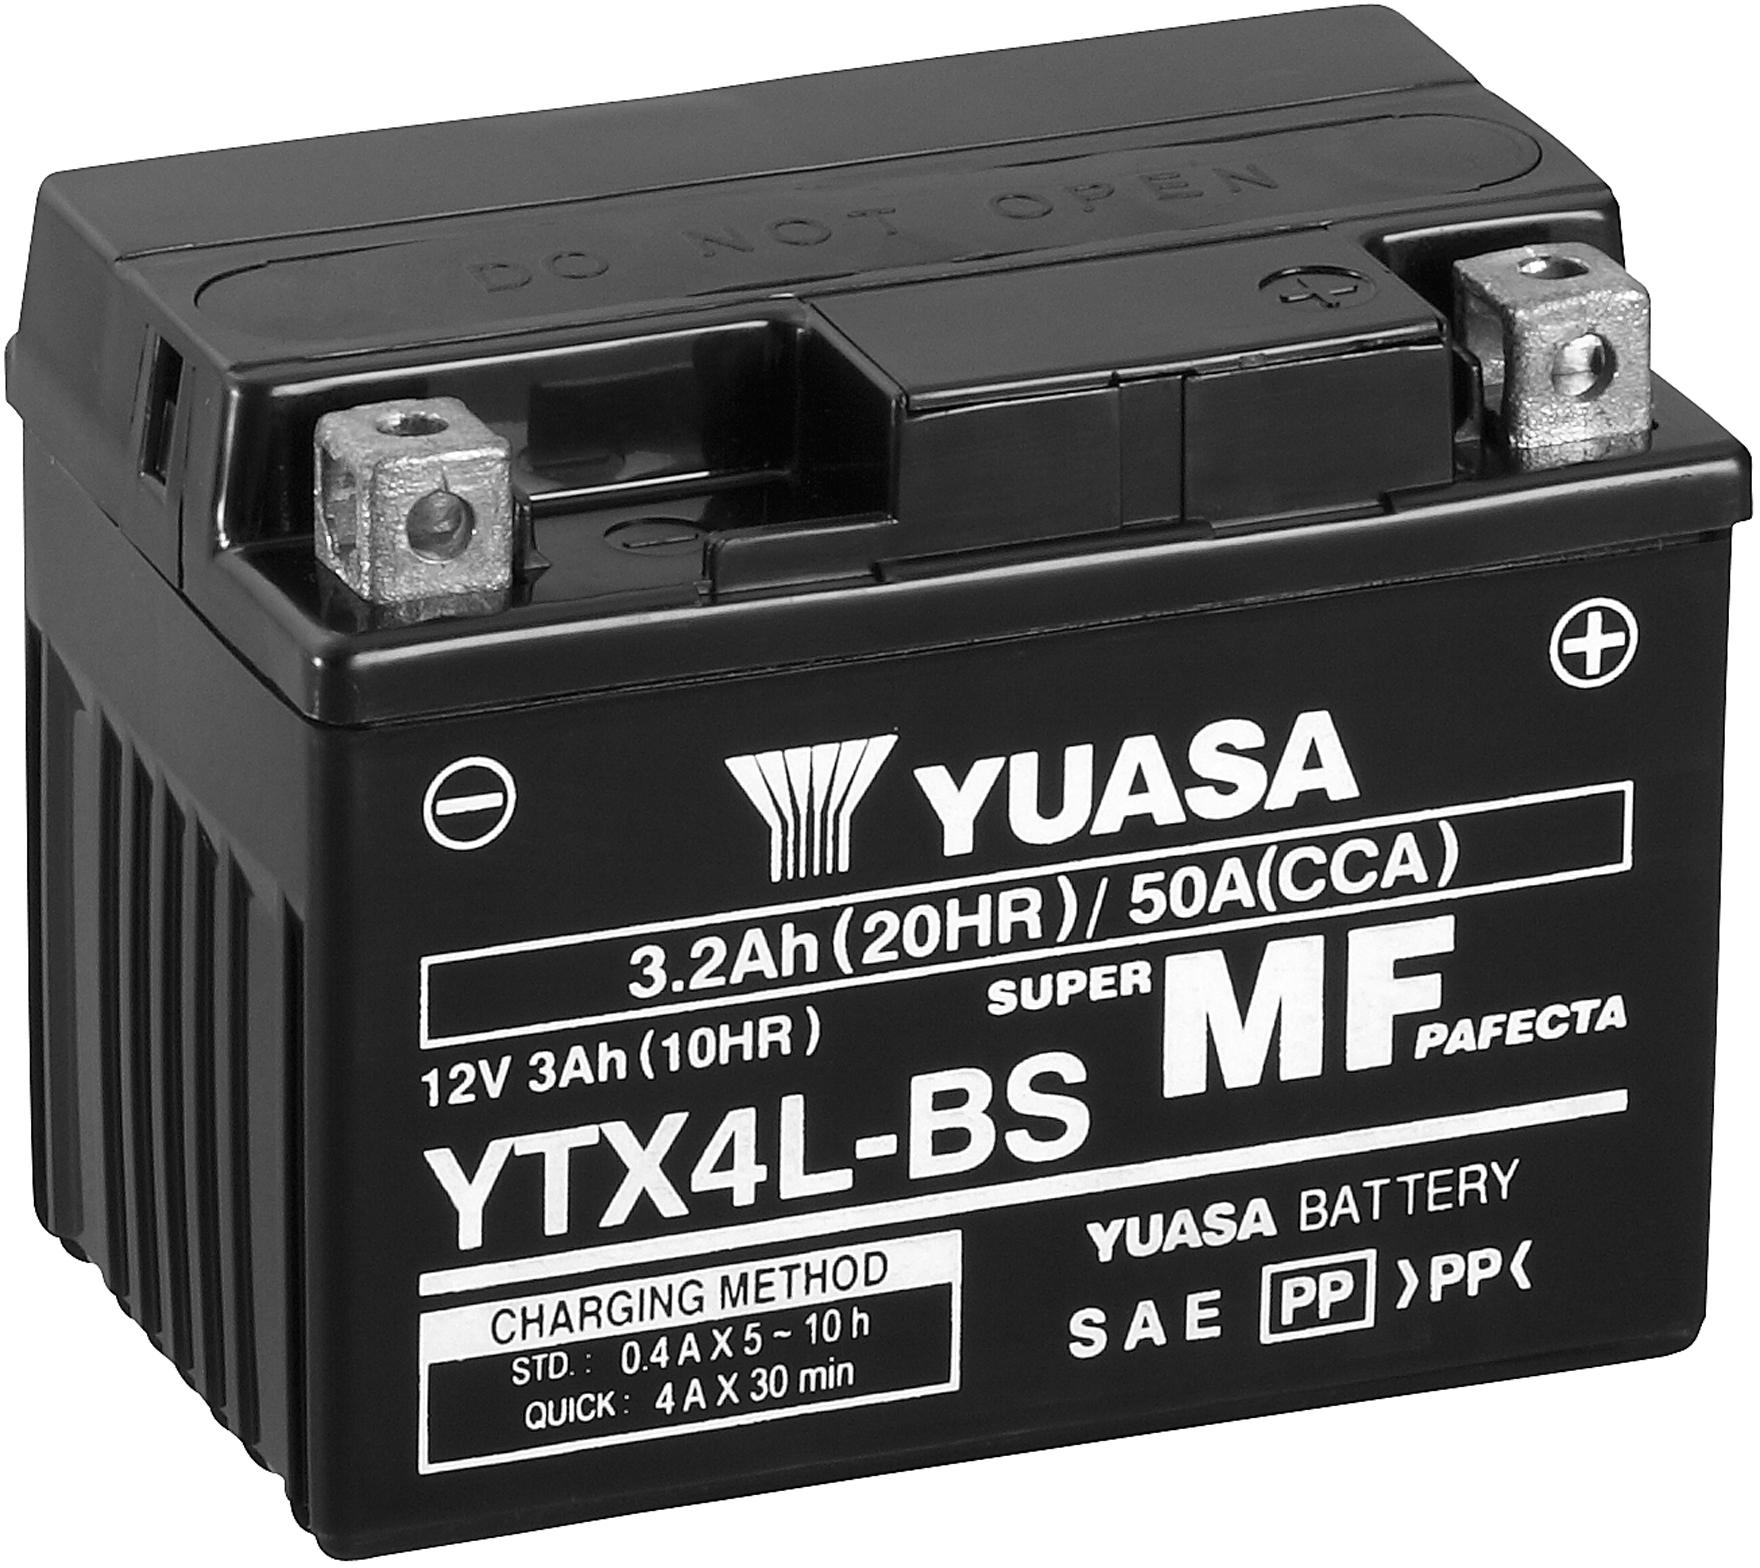 Yuasa Ytx4L-Bs Maintenance Free Motorcycle Battery